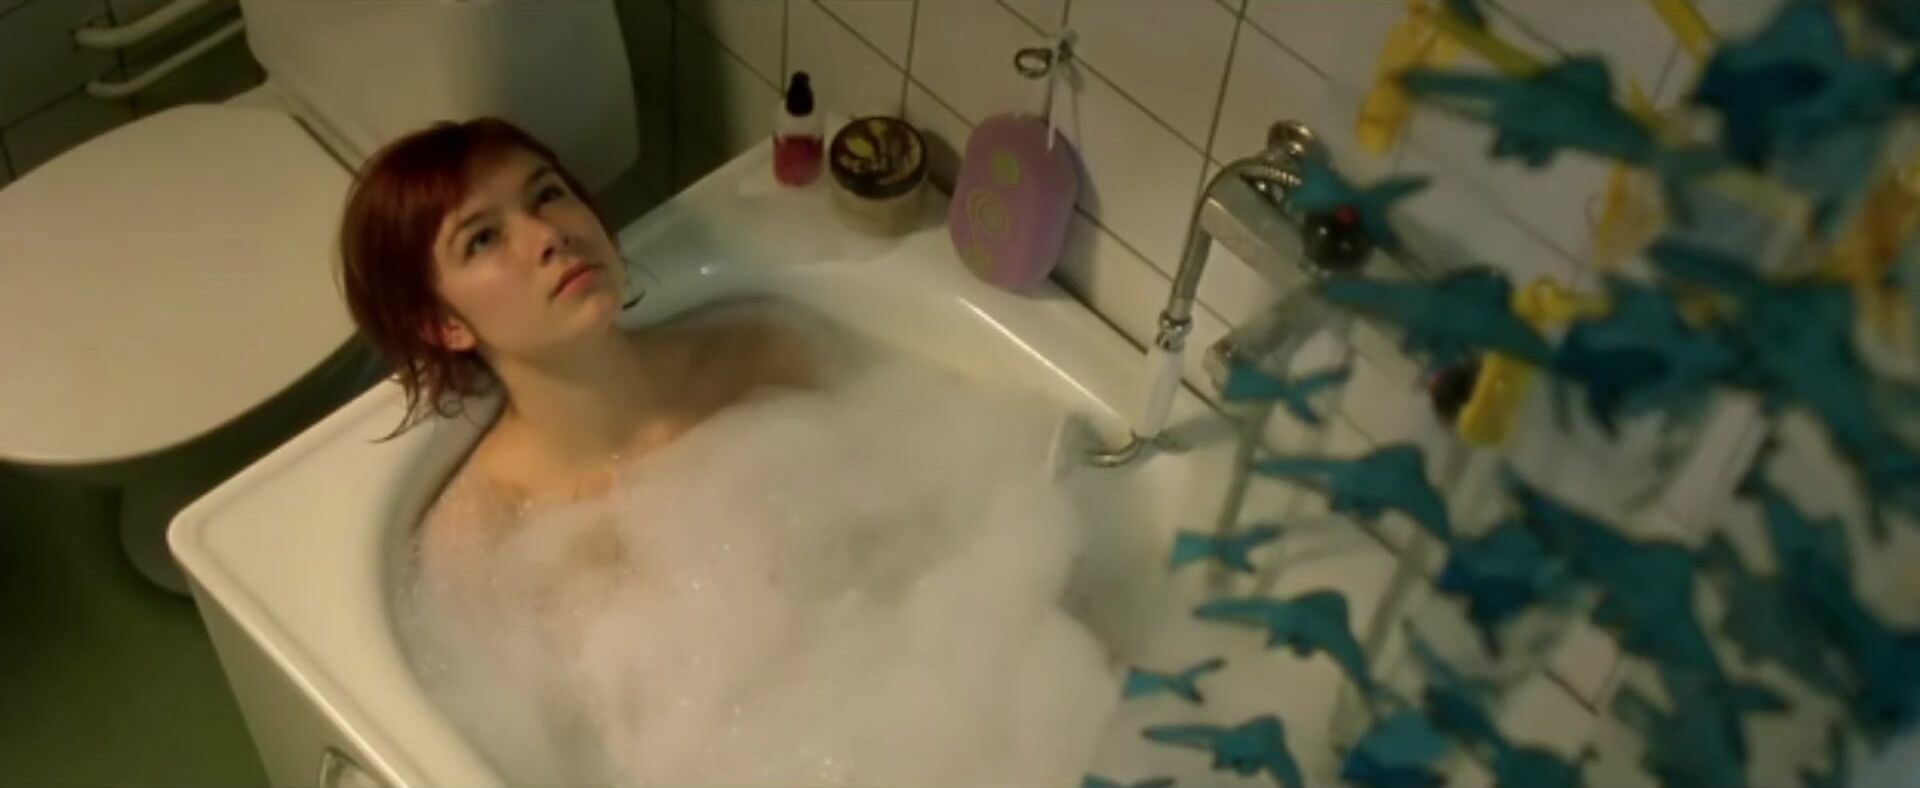 Amateur Swedish film Hannah Med H sex scene where man thrusts cock into Tove Edfeldt nude (2003) Couple - 1